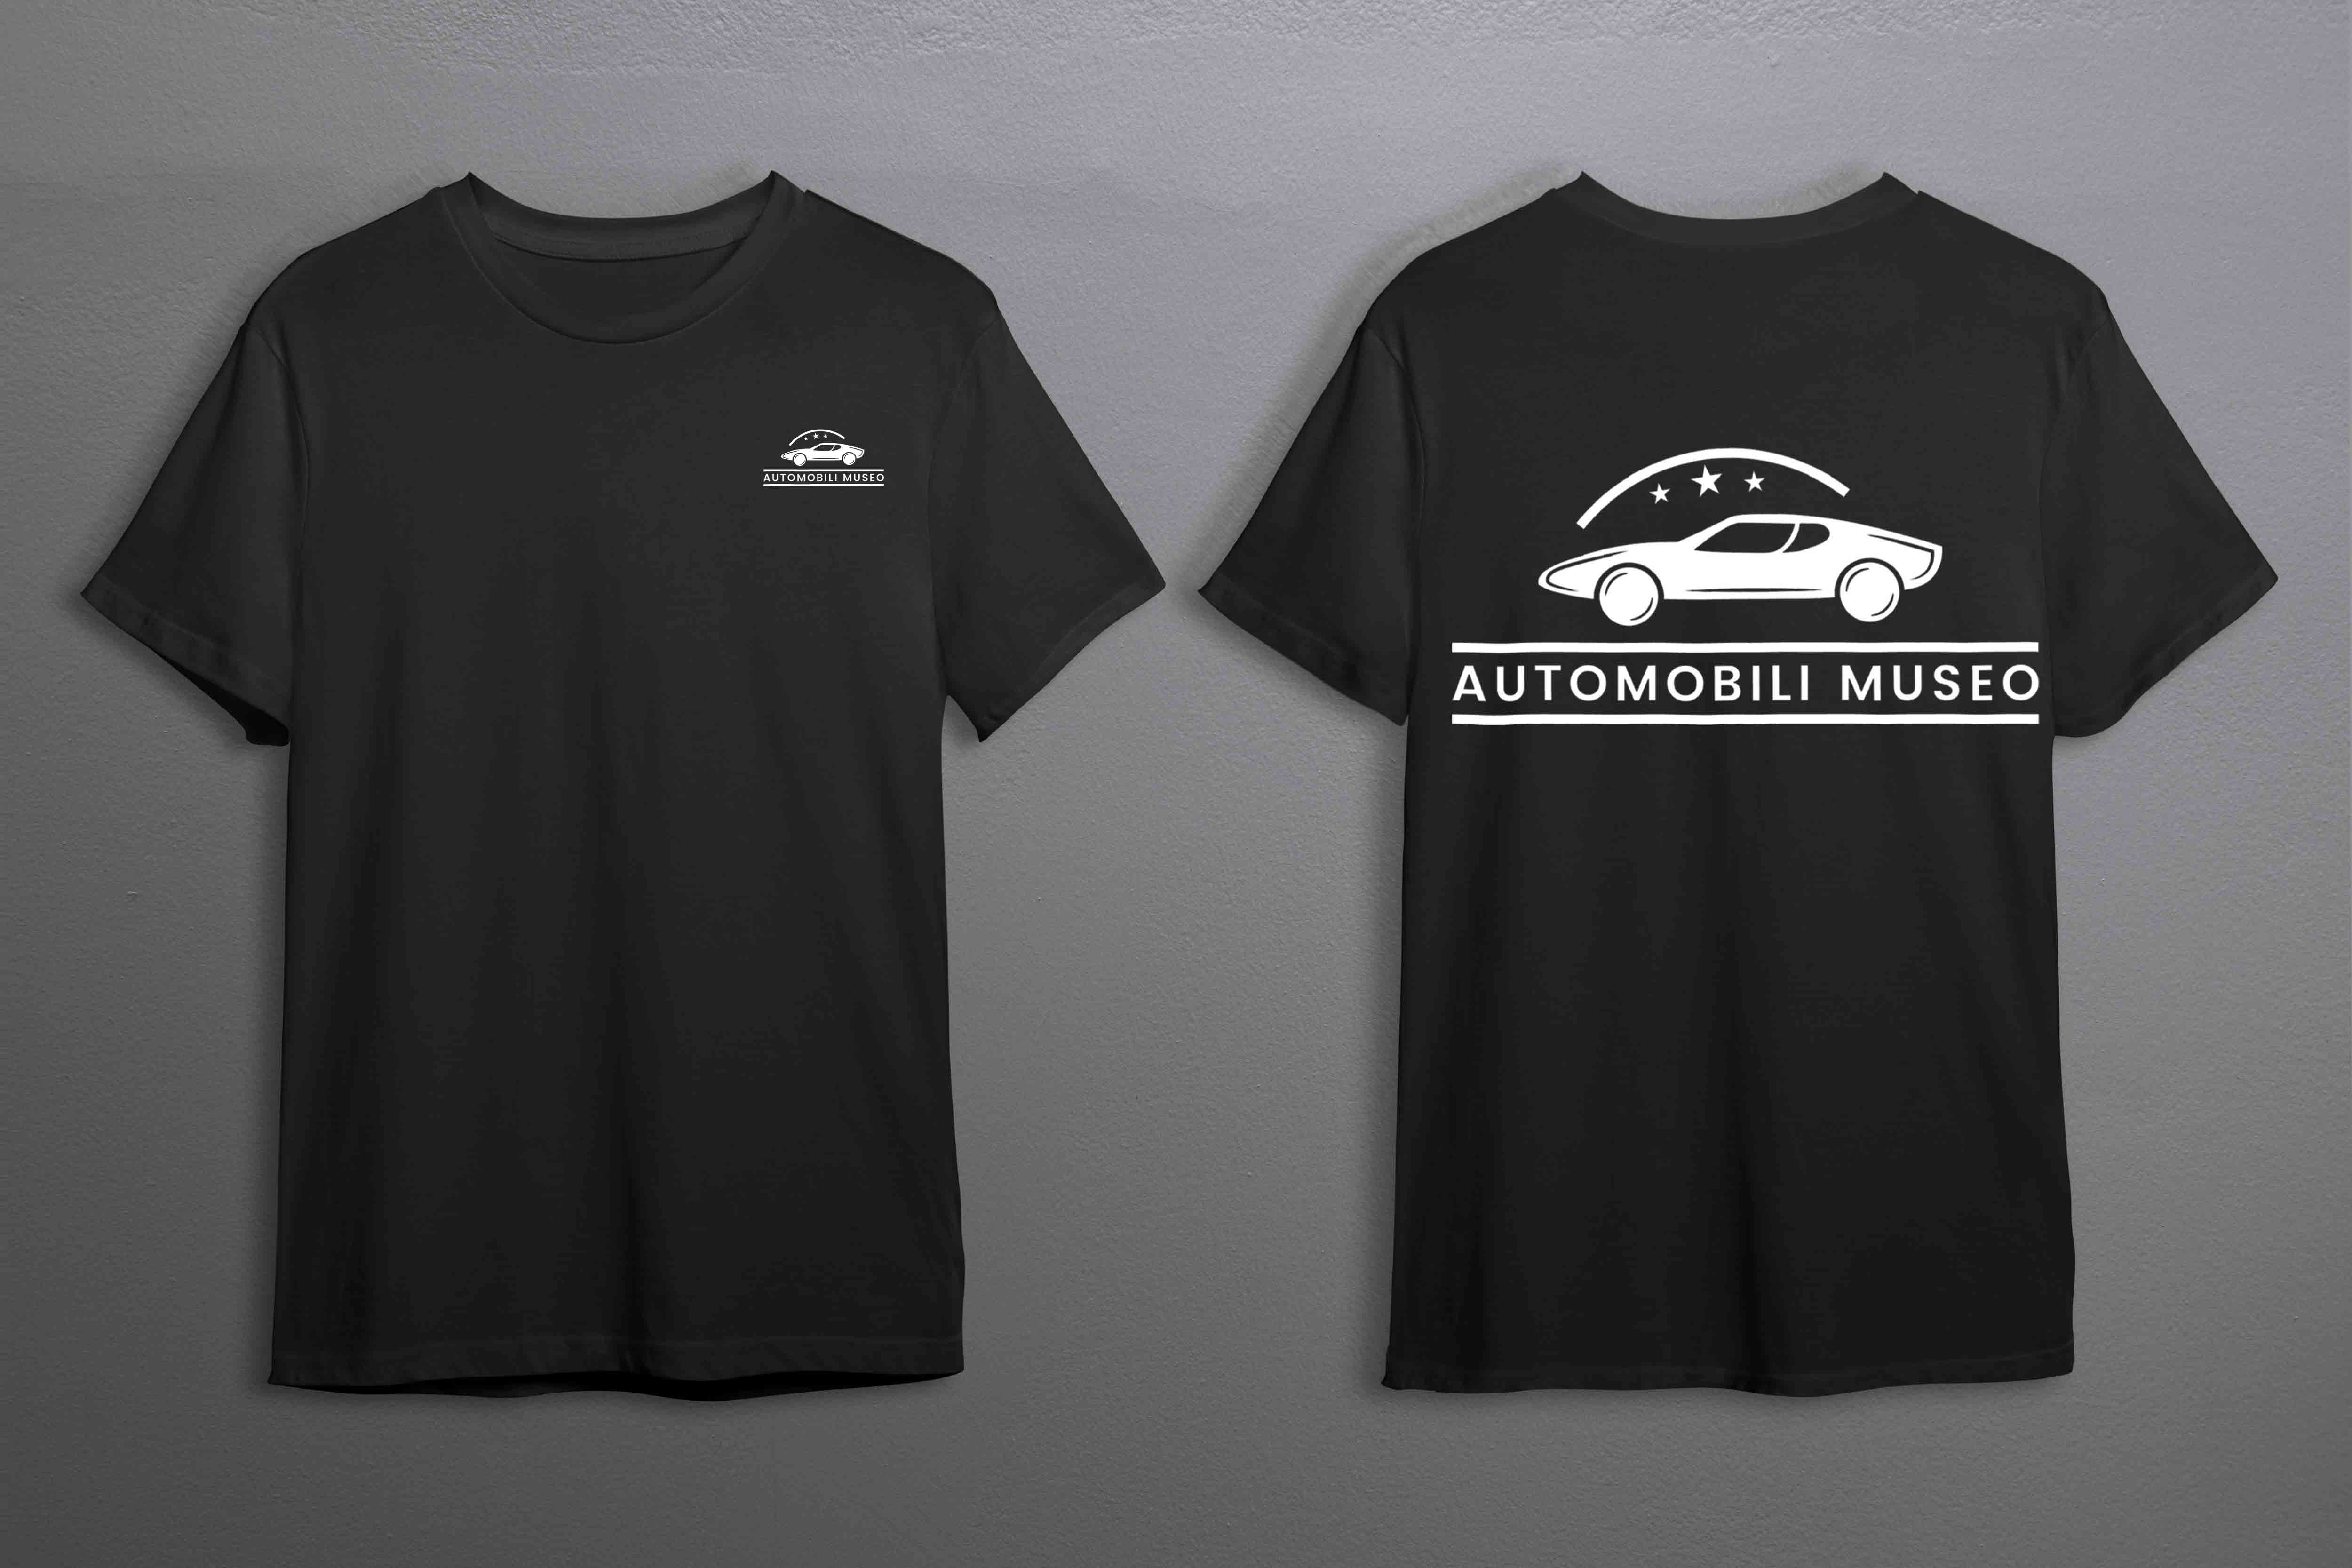 Automobile Museo Black T Shirt